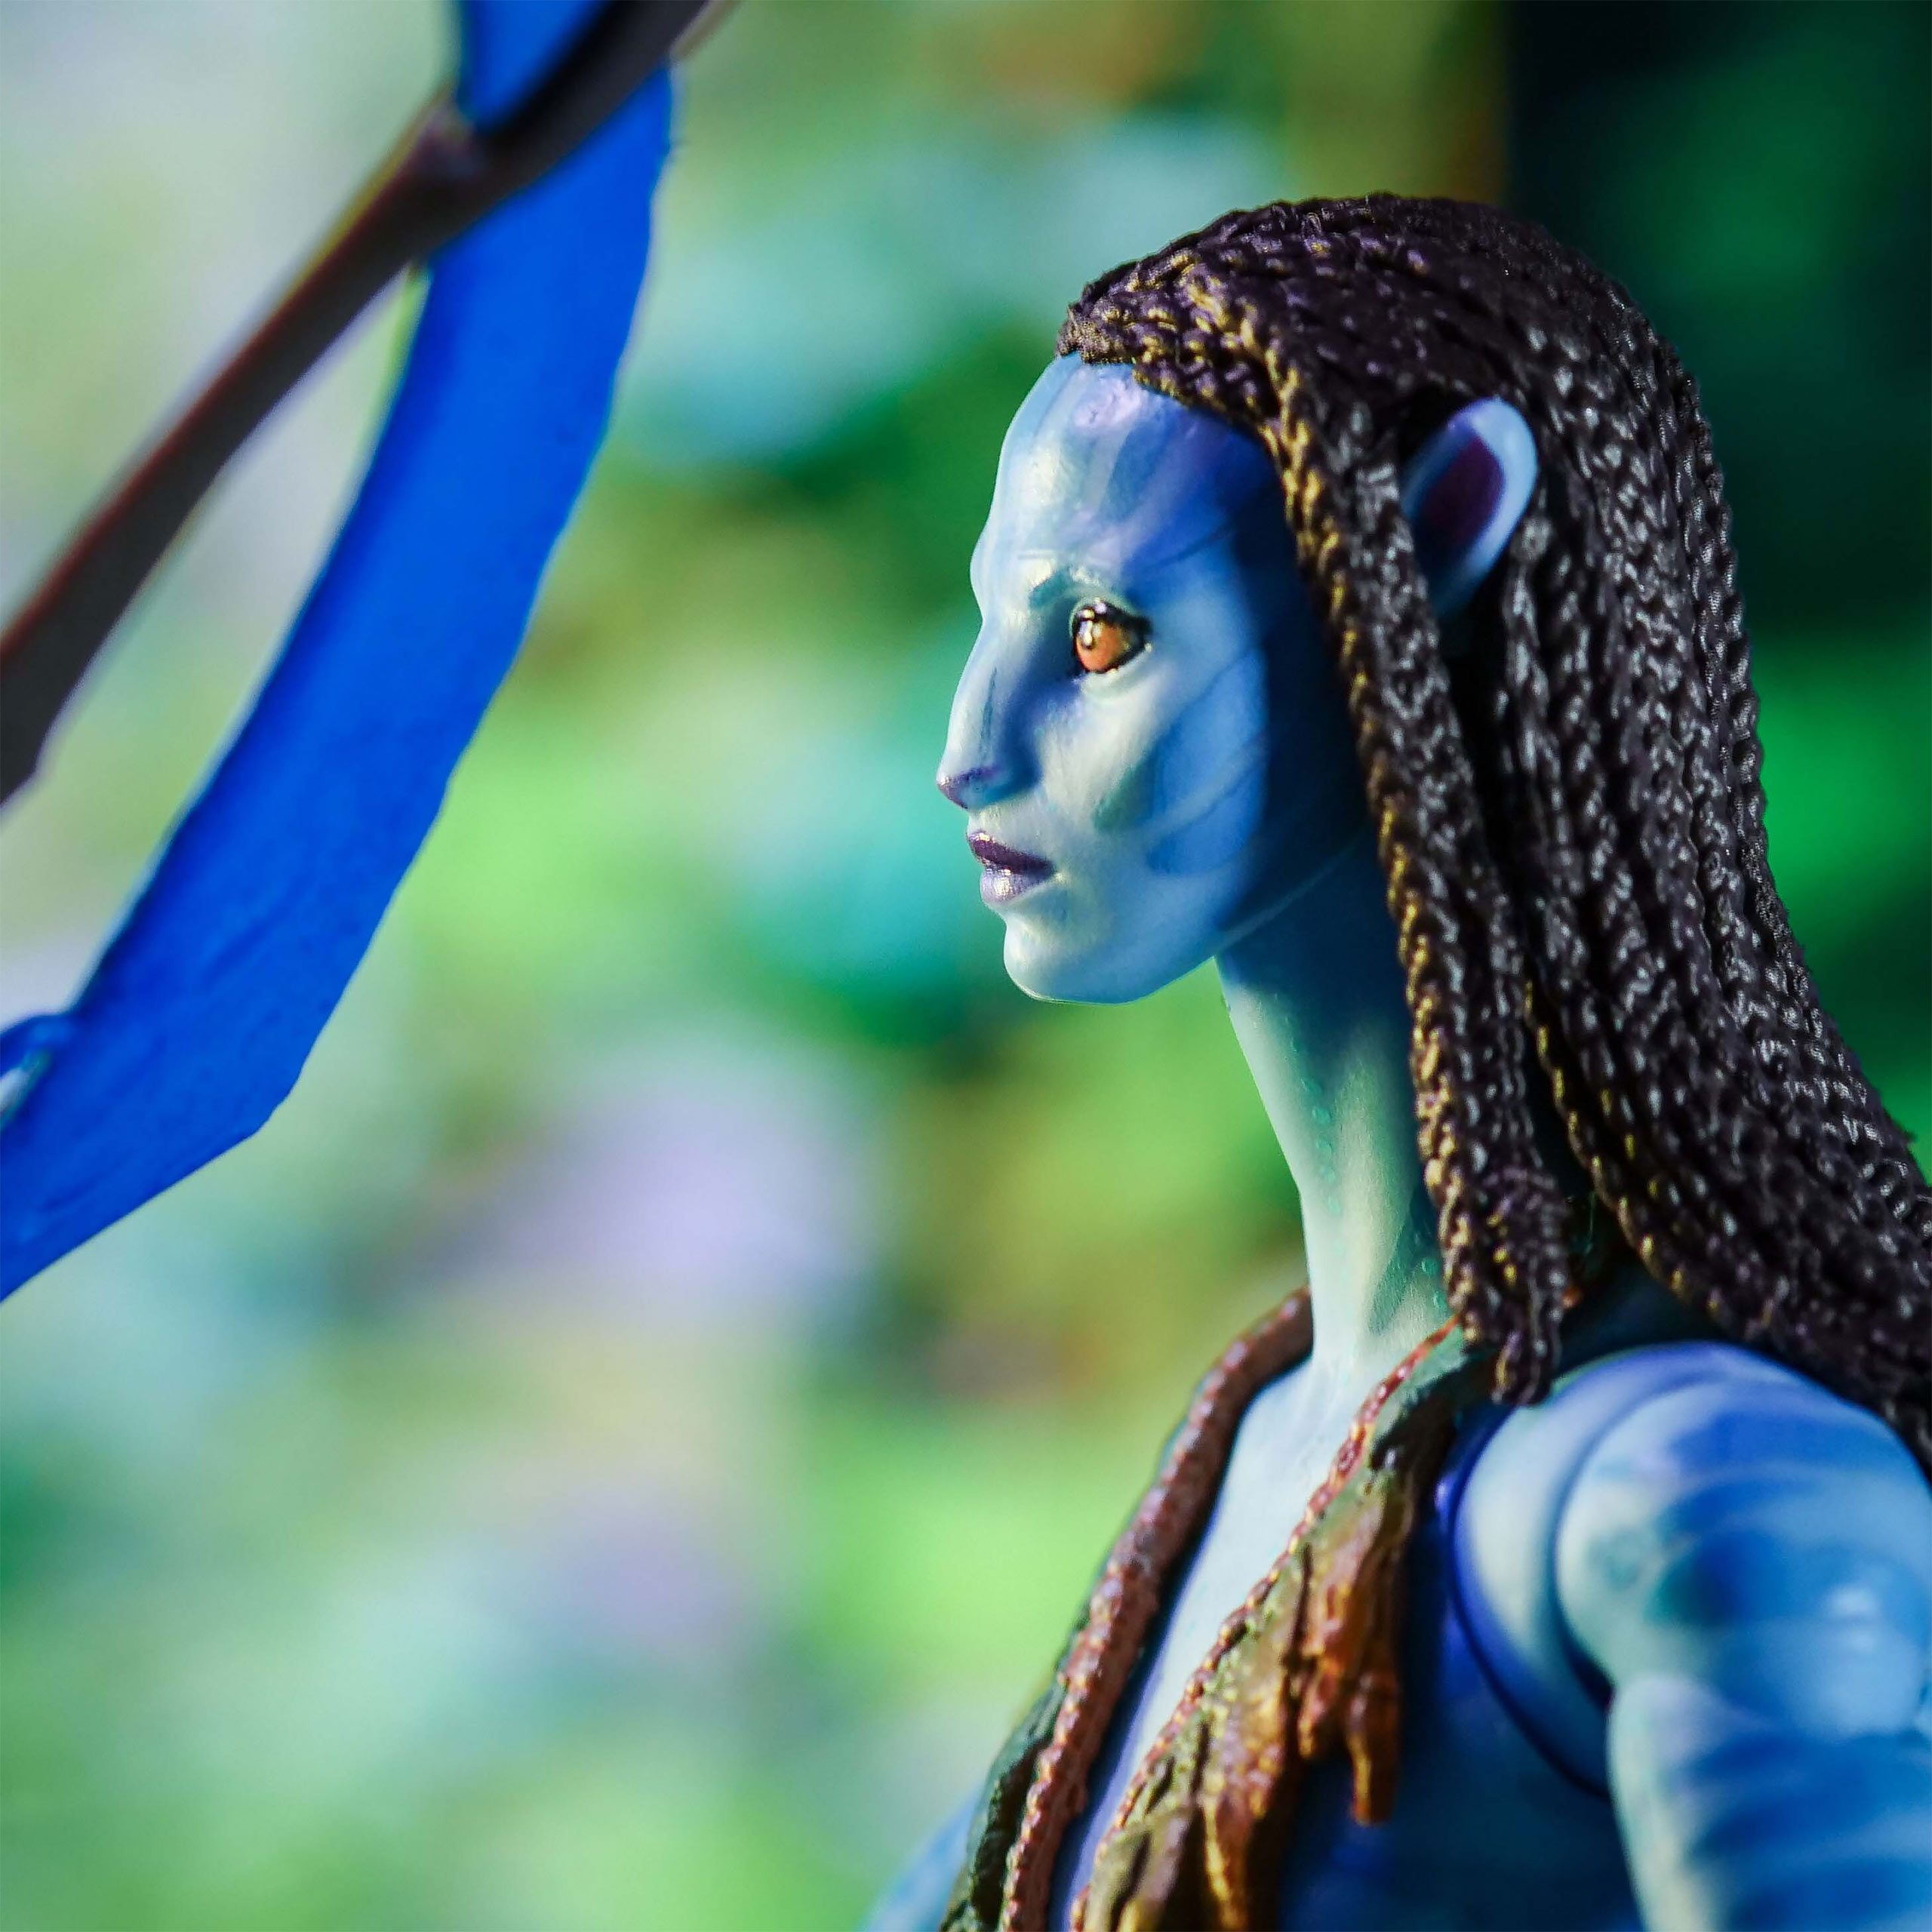 Avatar: The Way of Water - Neytiri Actionfigur